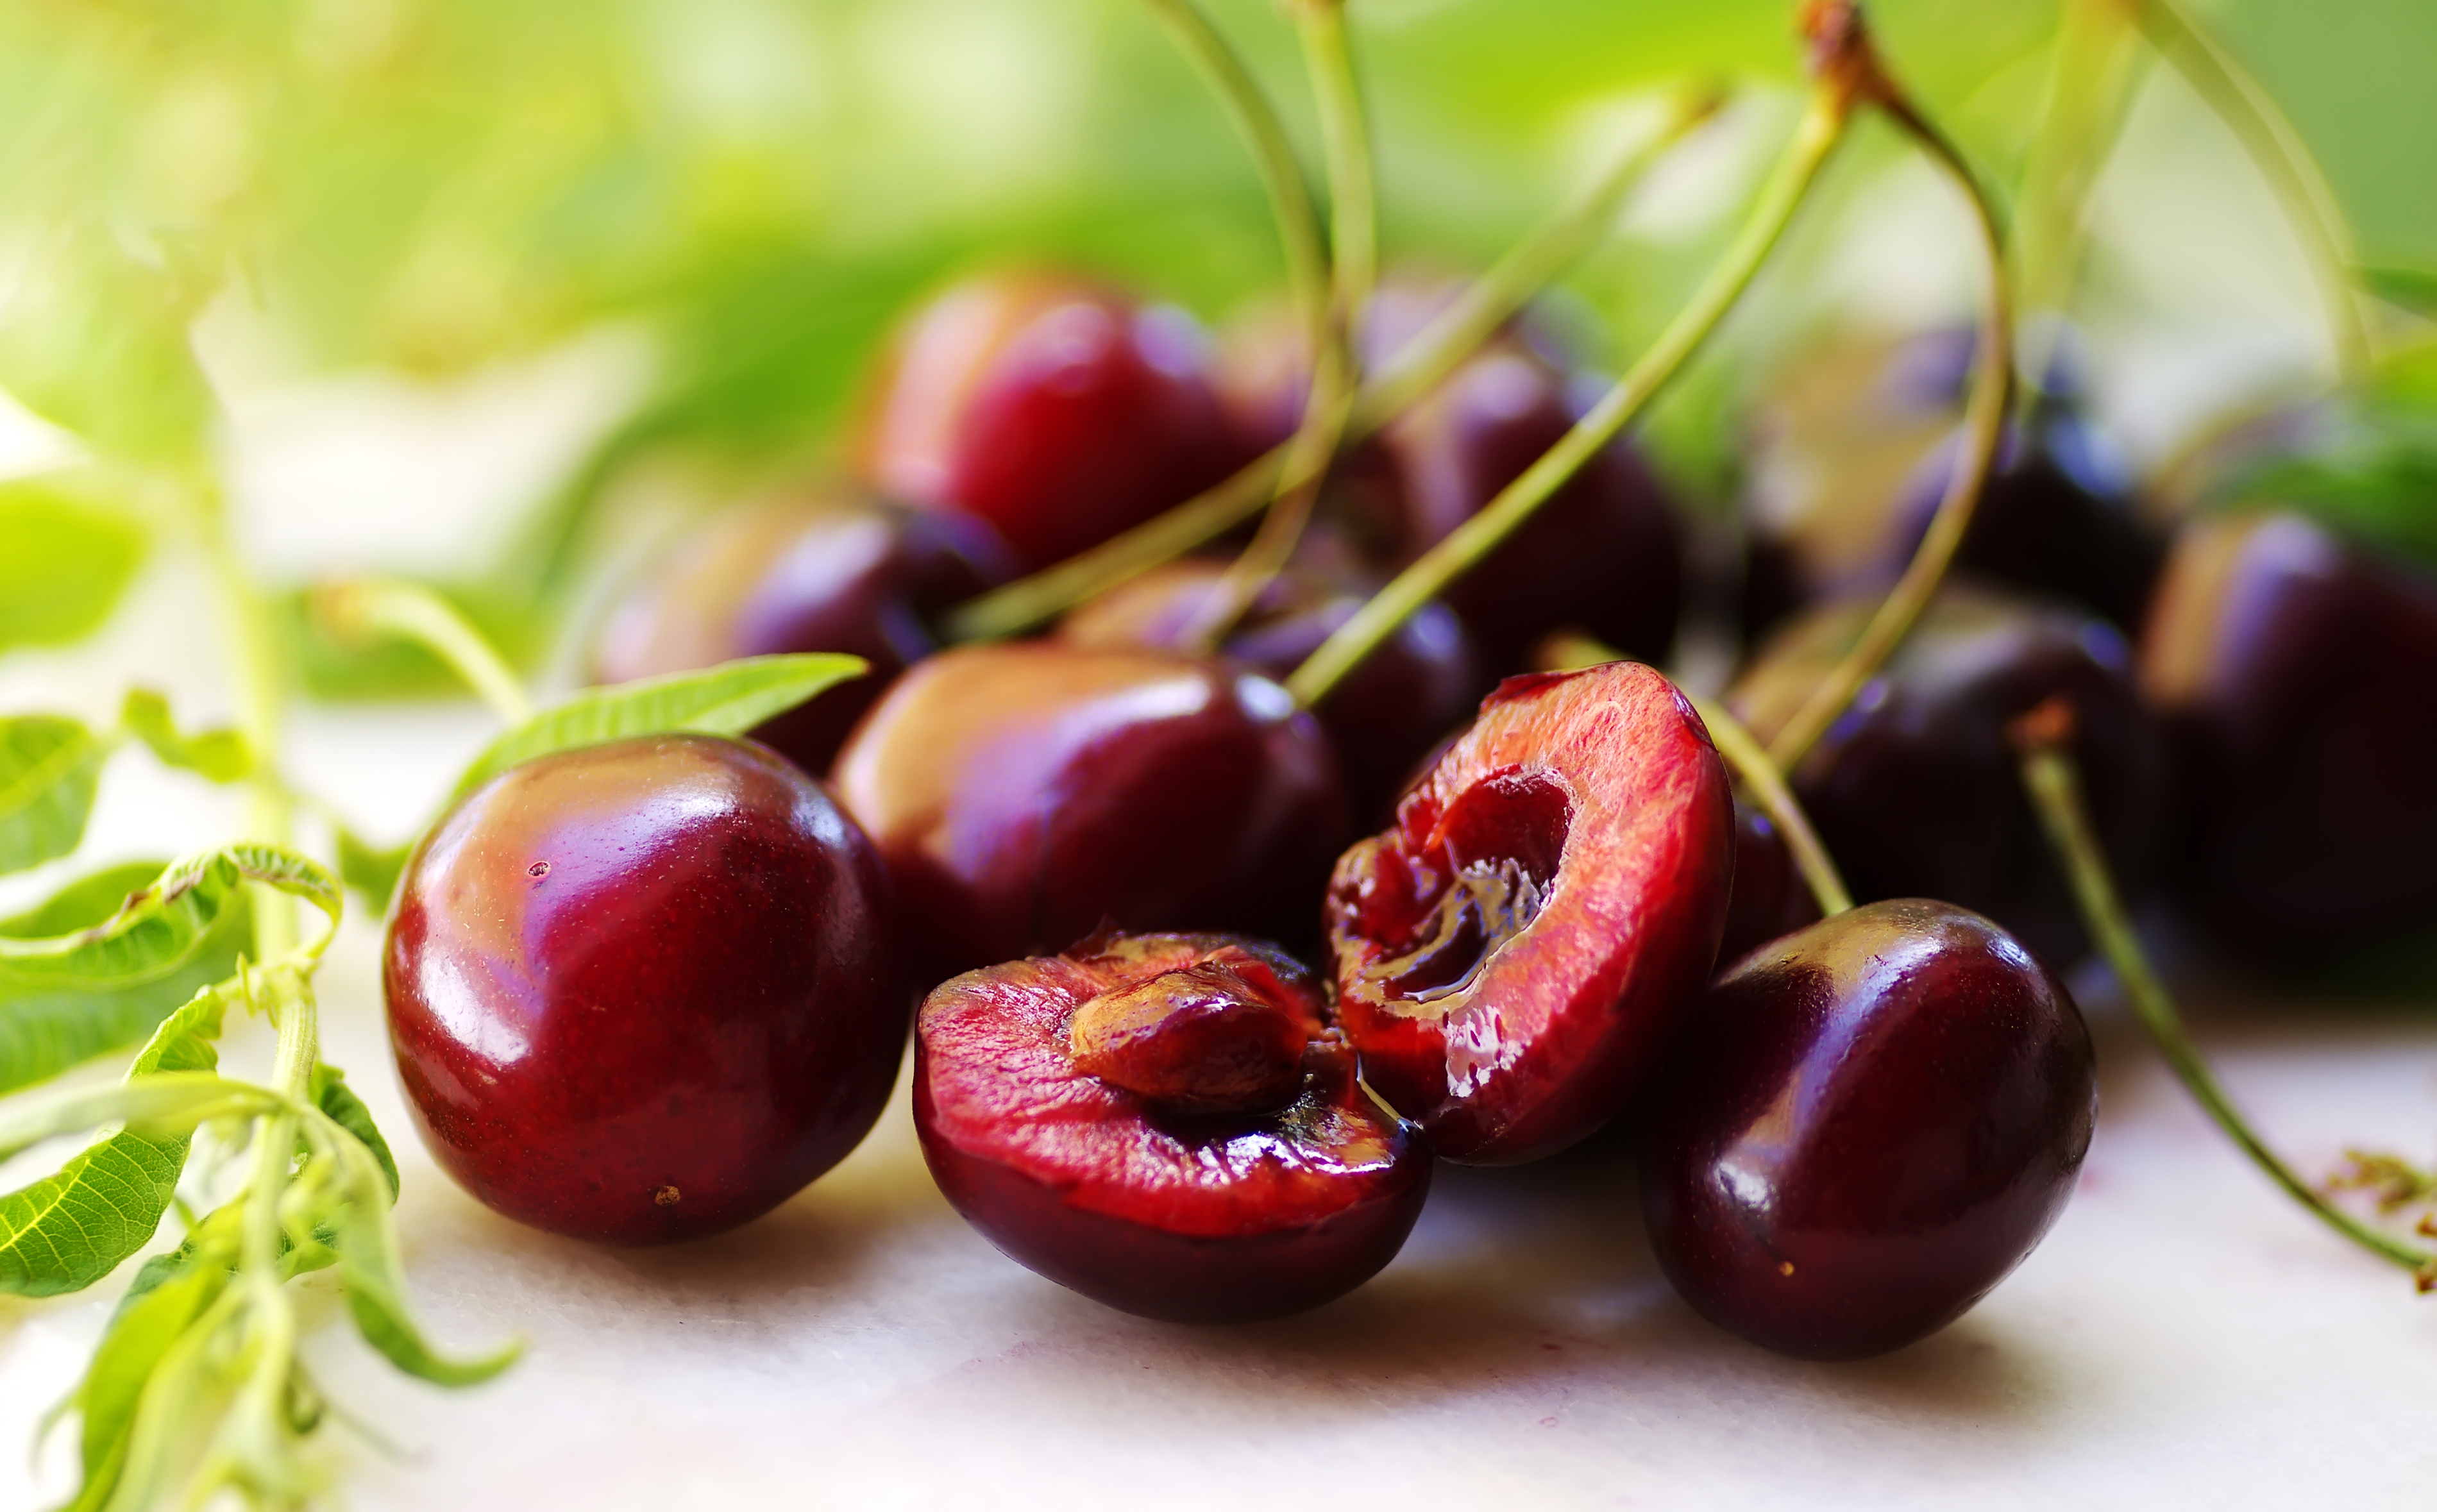 superfood saturday: cherries